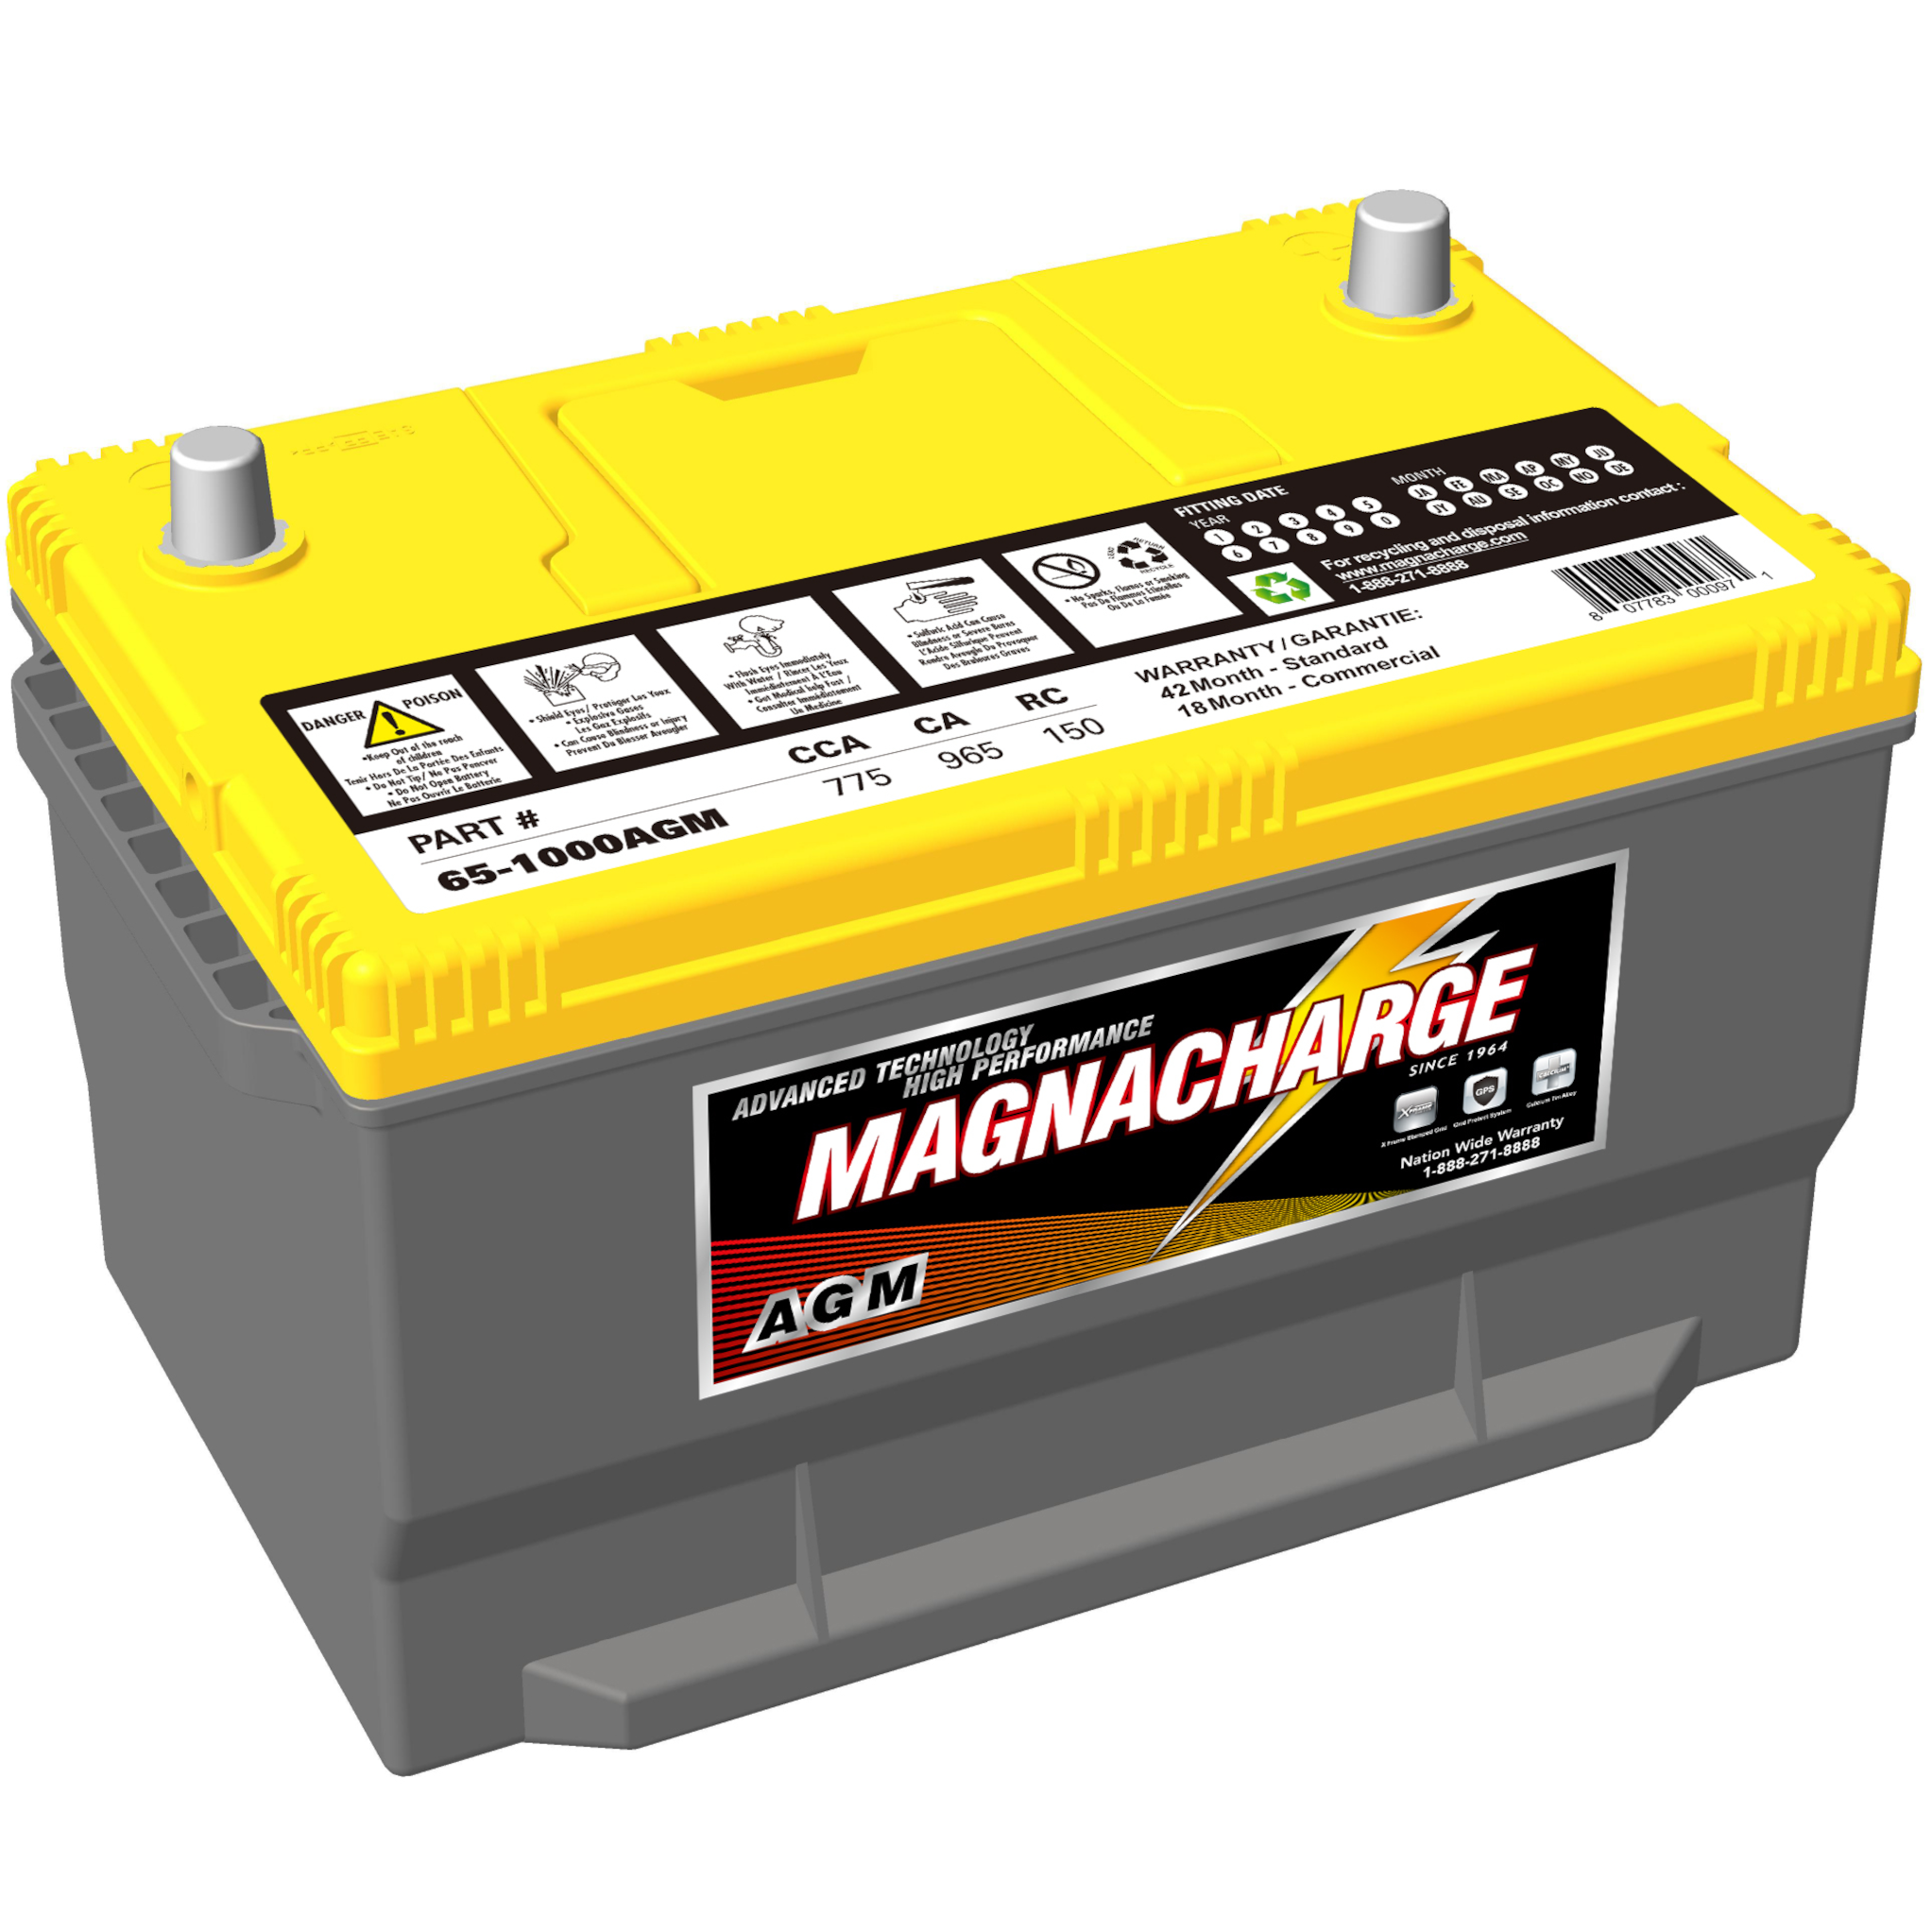 Magnacharge 65-1000AGM Group 65 AGM Car Battery